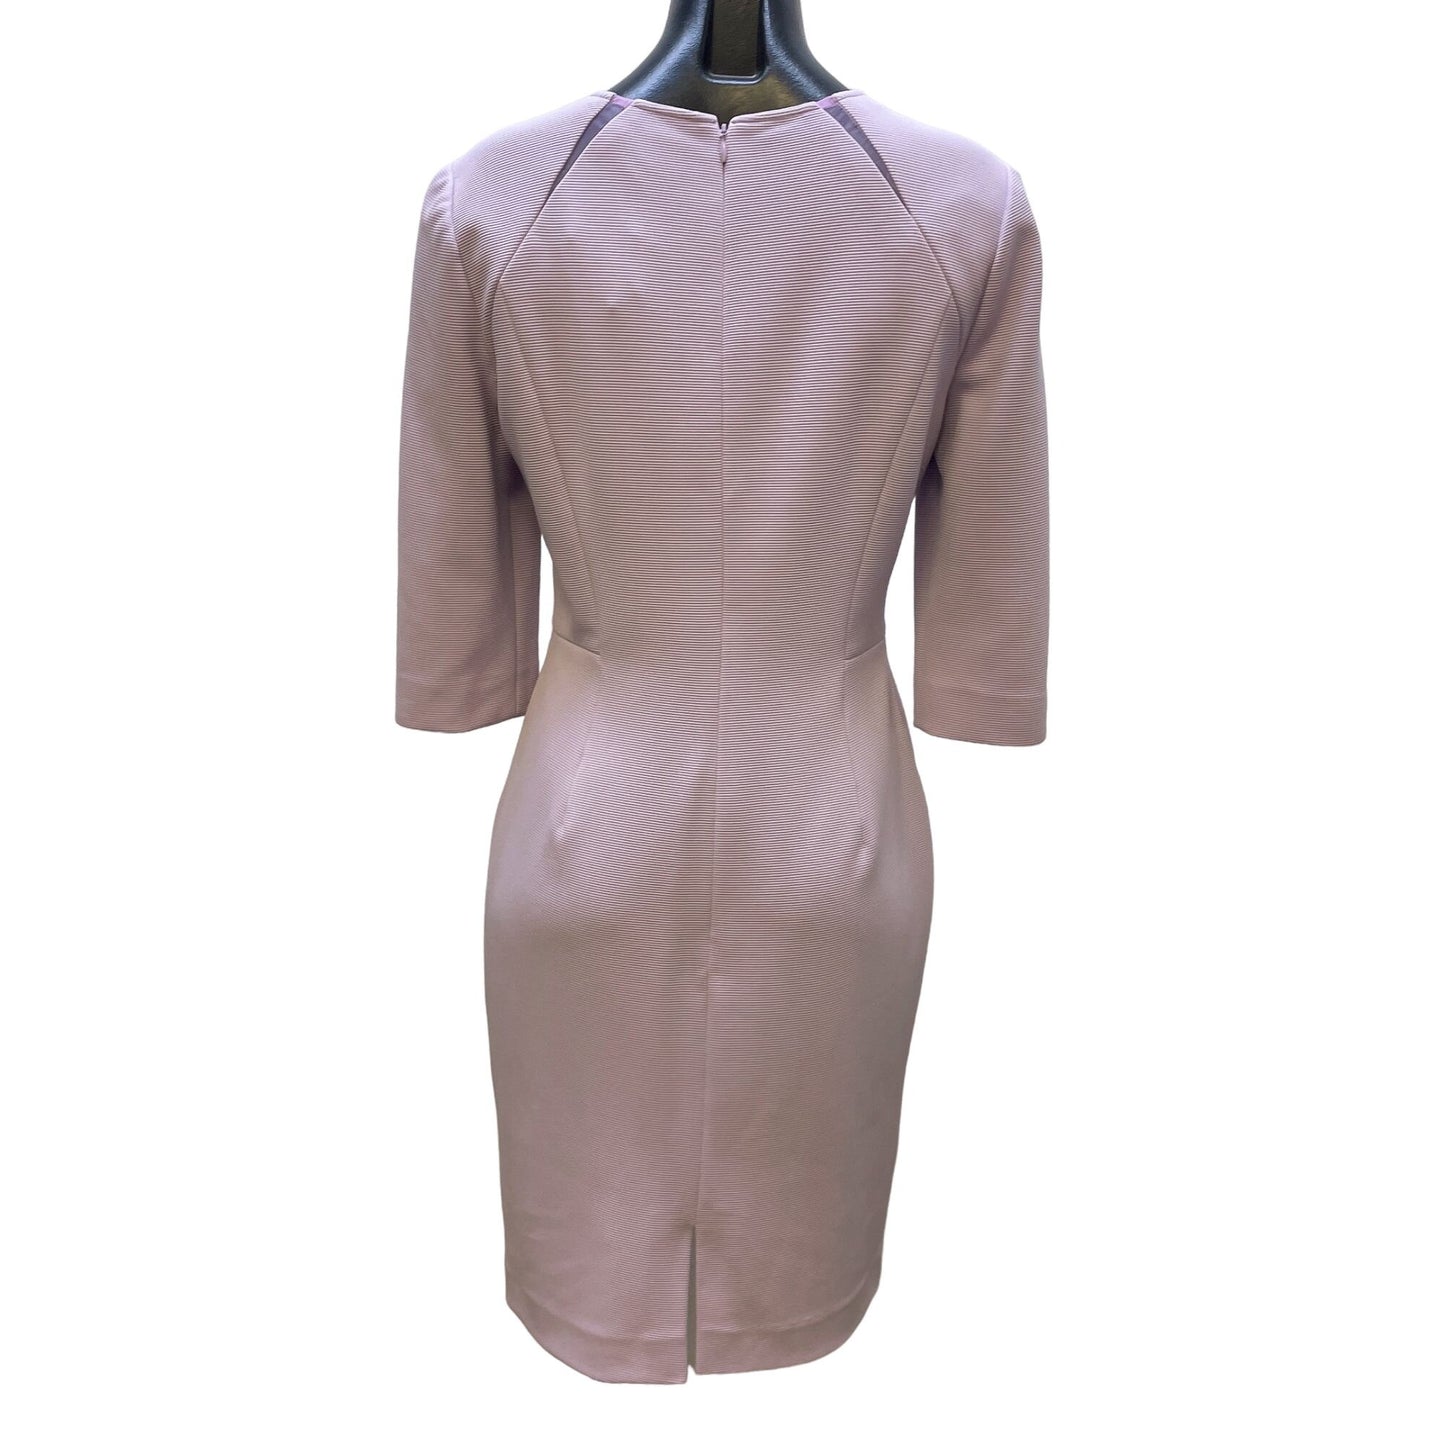 *Badgley Mischka Lavender Dress Midi Ribbed Size 6